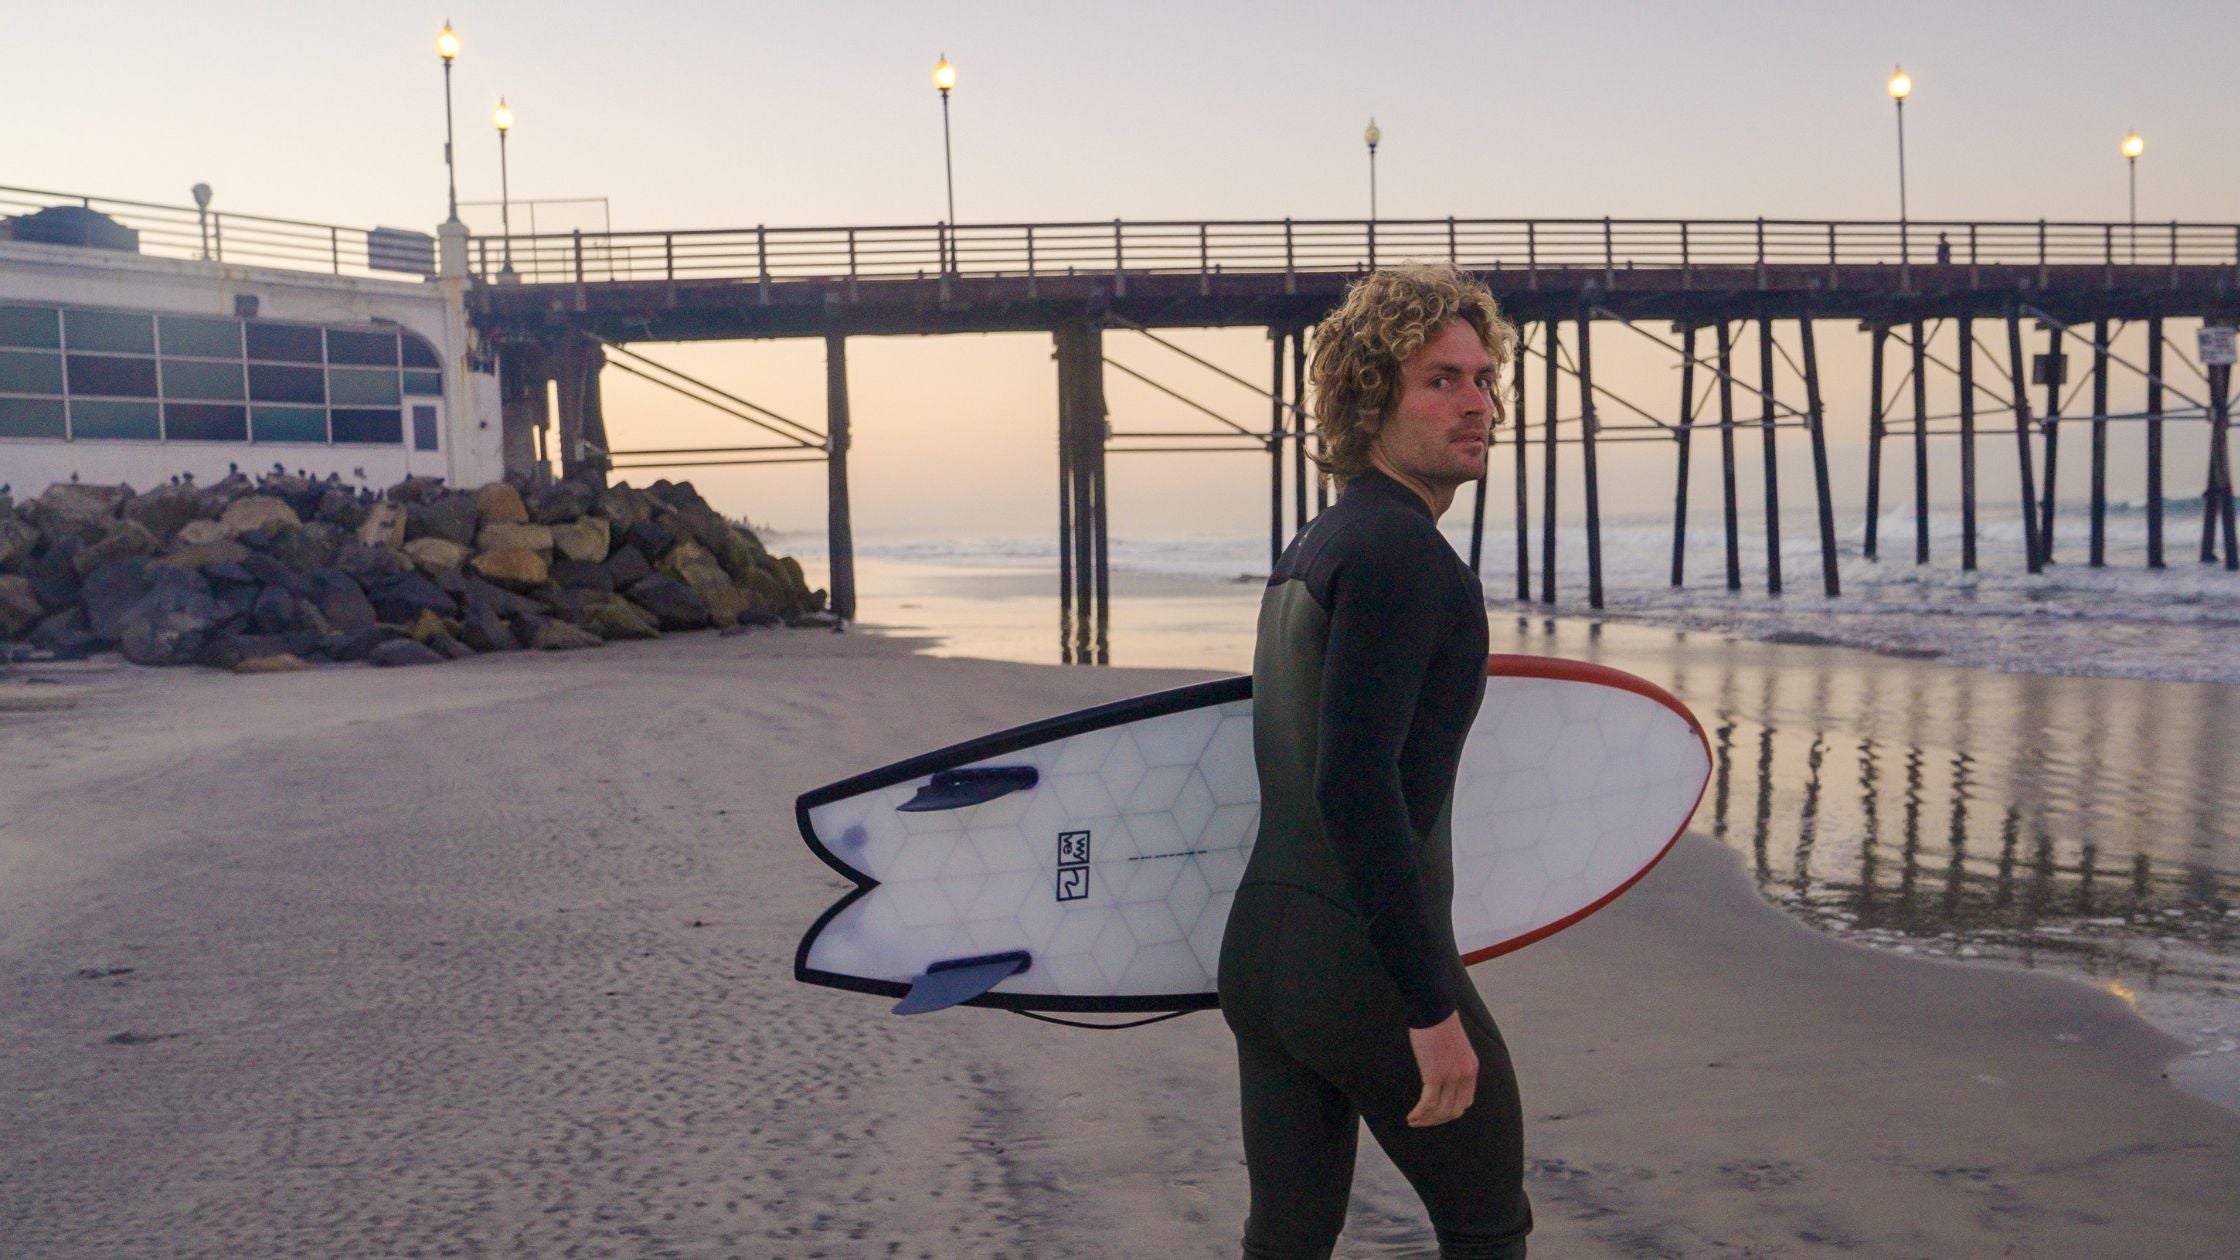 Fish surfboard - Ecological surfboard - Wyve surfboard in California